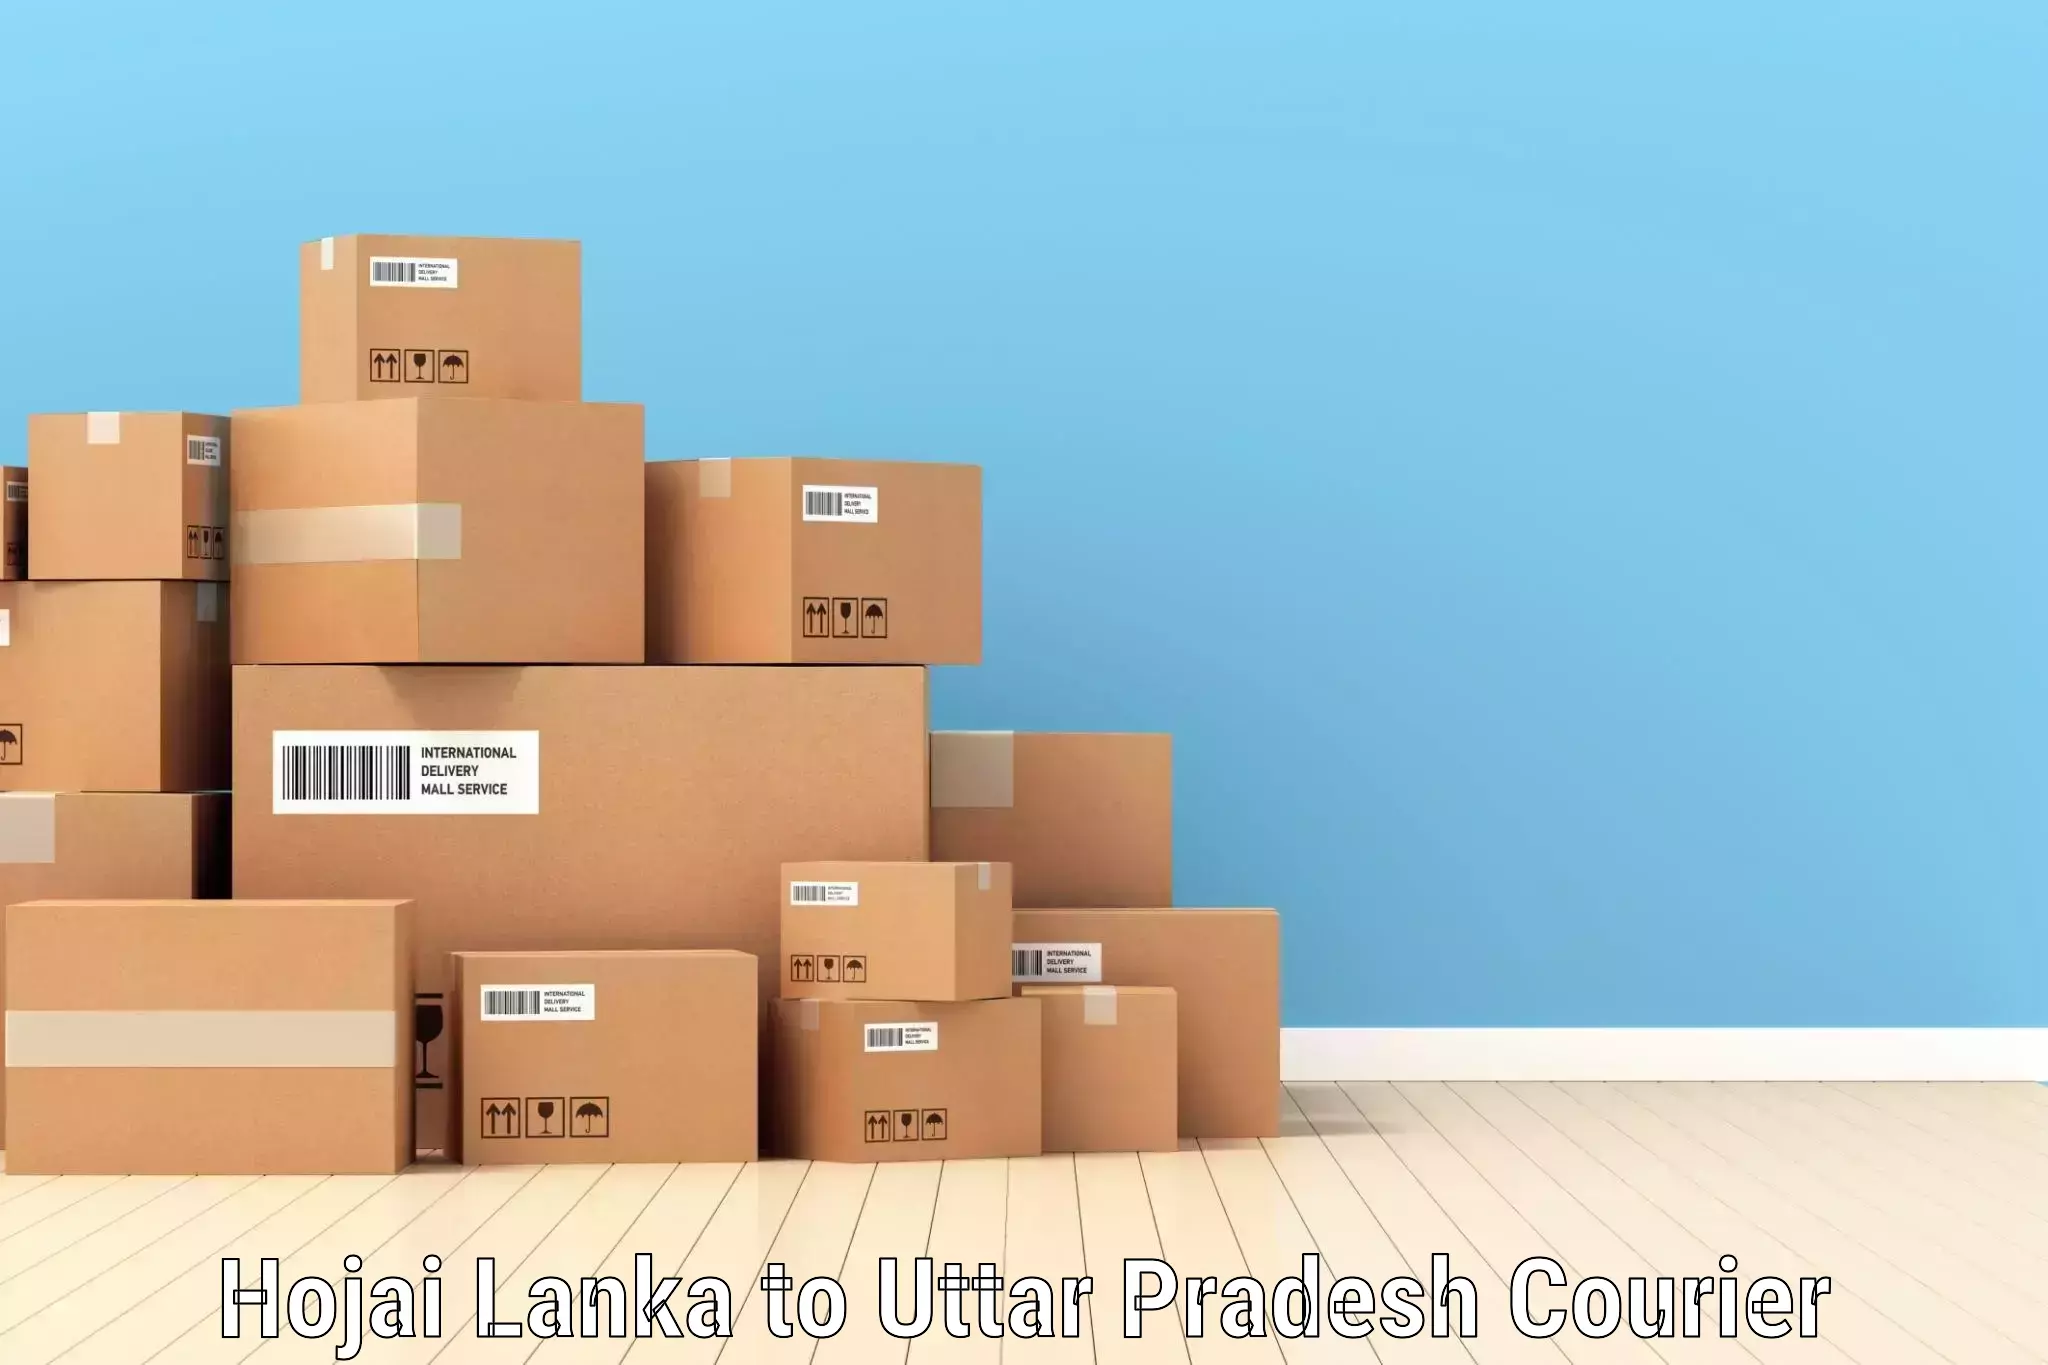 Affordable parcel rates Hojai Lanka to Kanpur